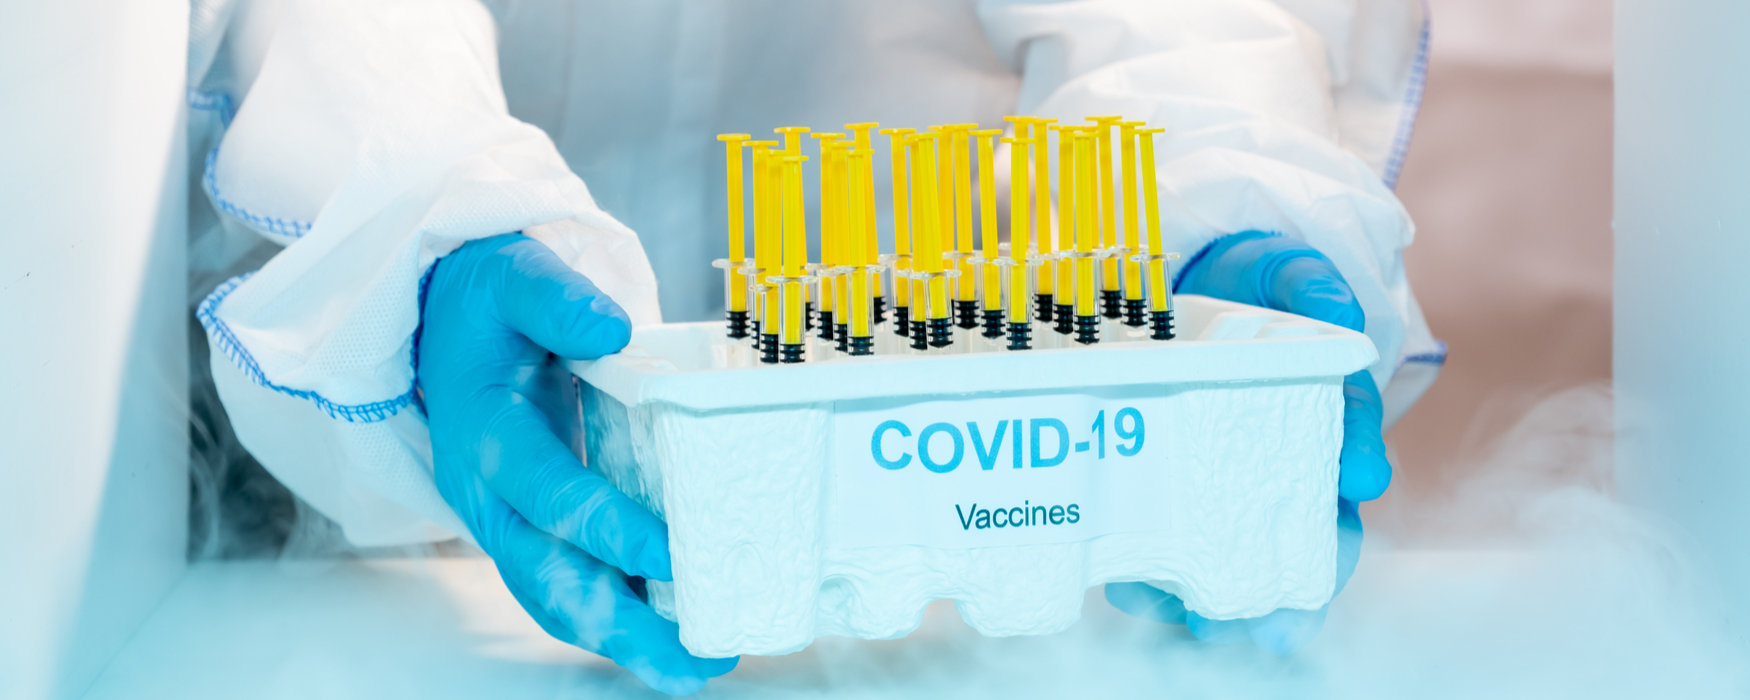 Utah covid vaccine freezers - covid 19 vaccine freezer - vaccine storage in Utah